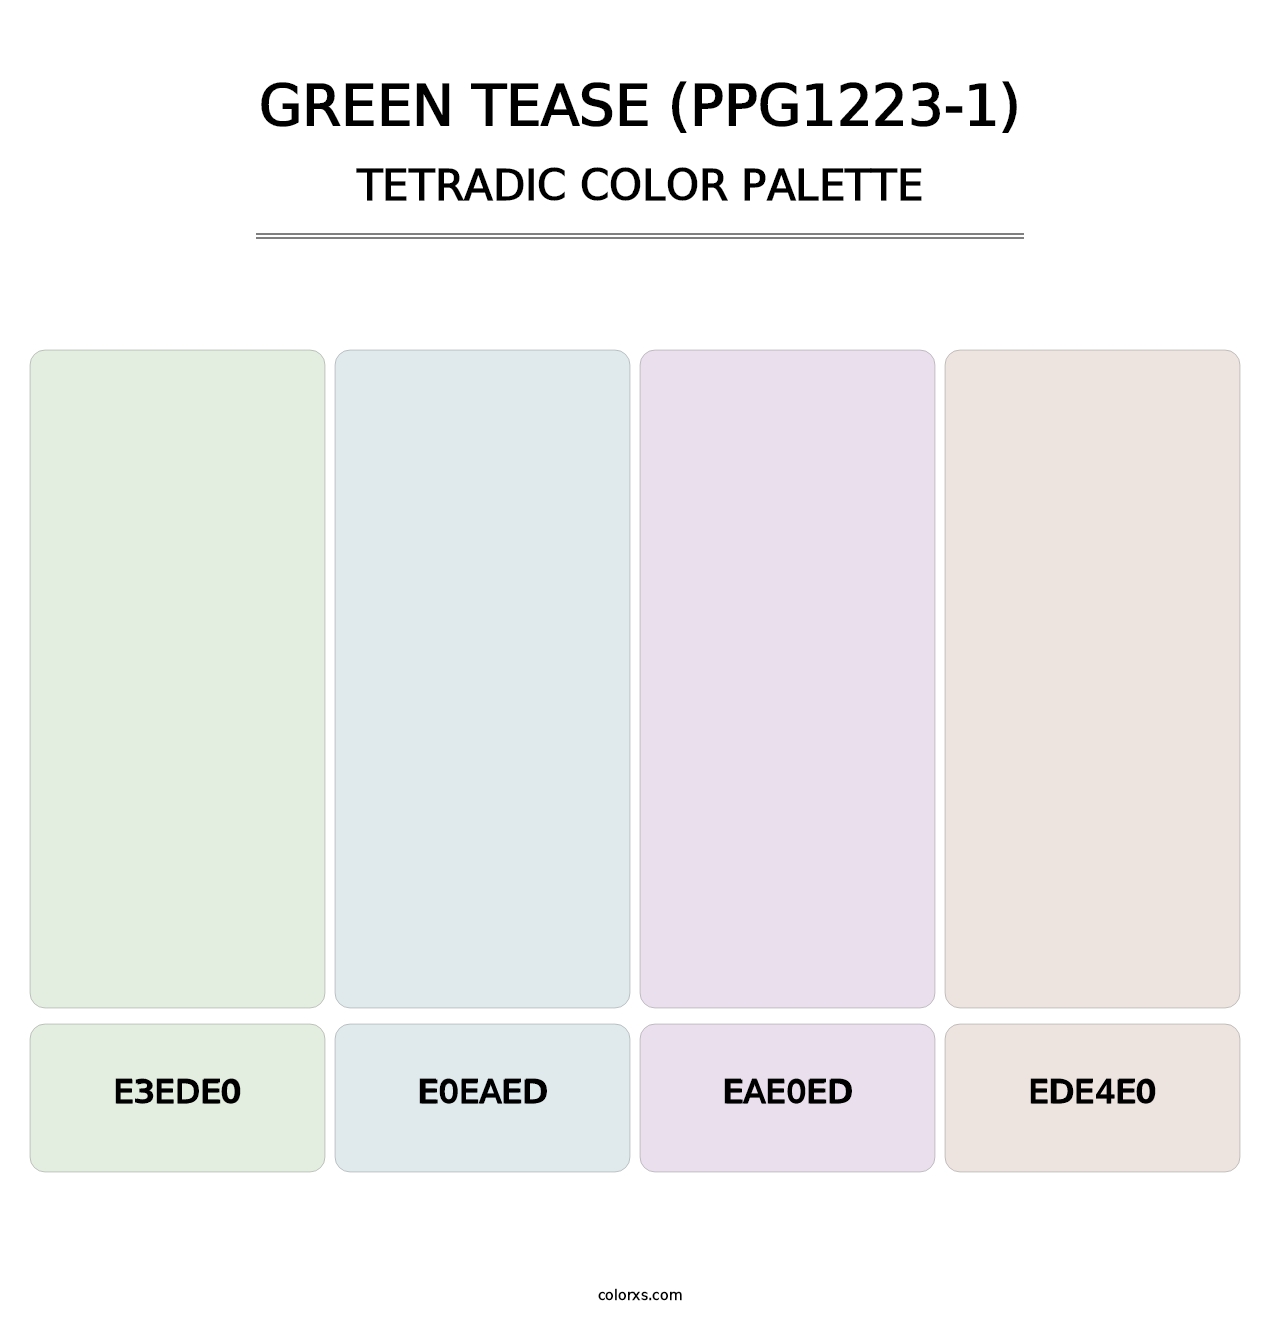 Green Tease (PPG1223-1) - Tetradic Color Palette